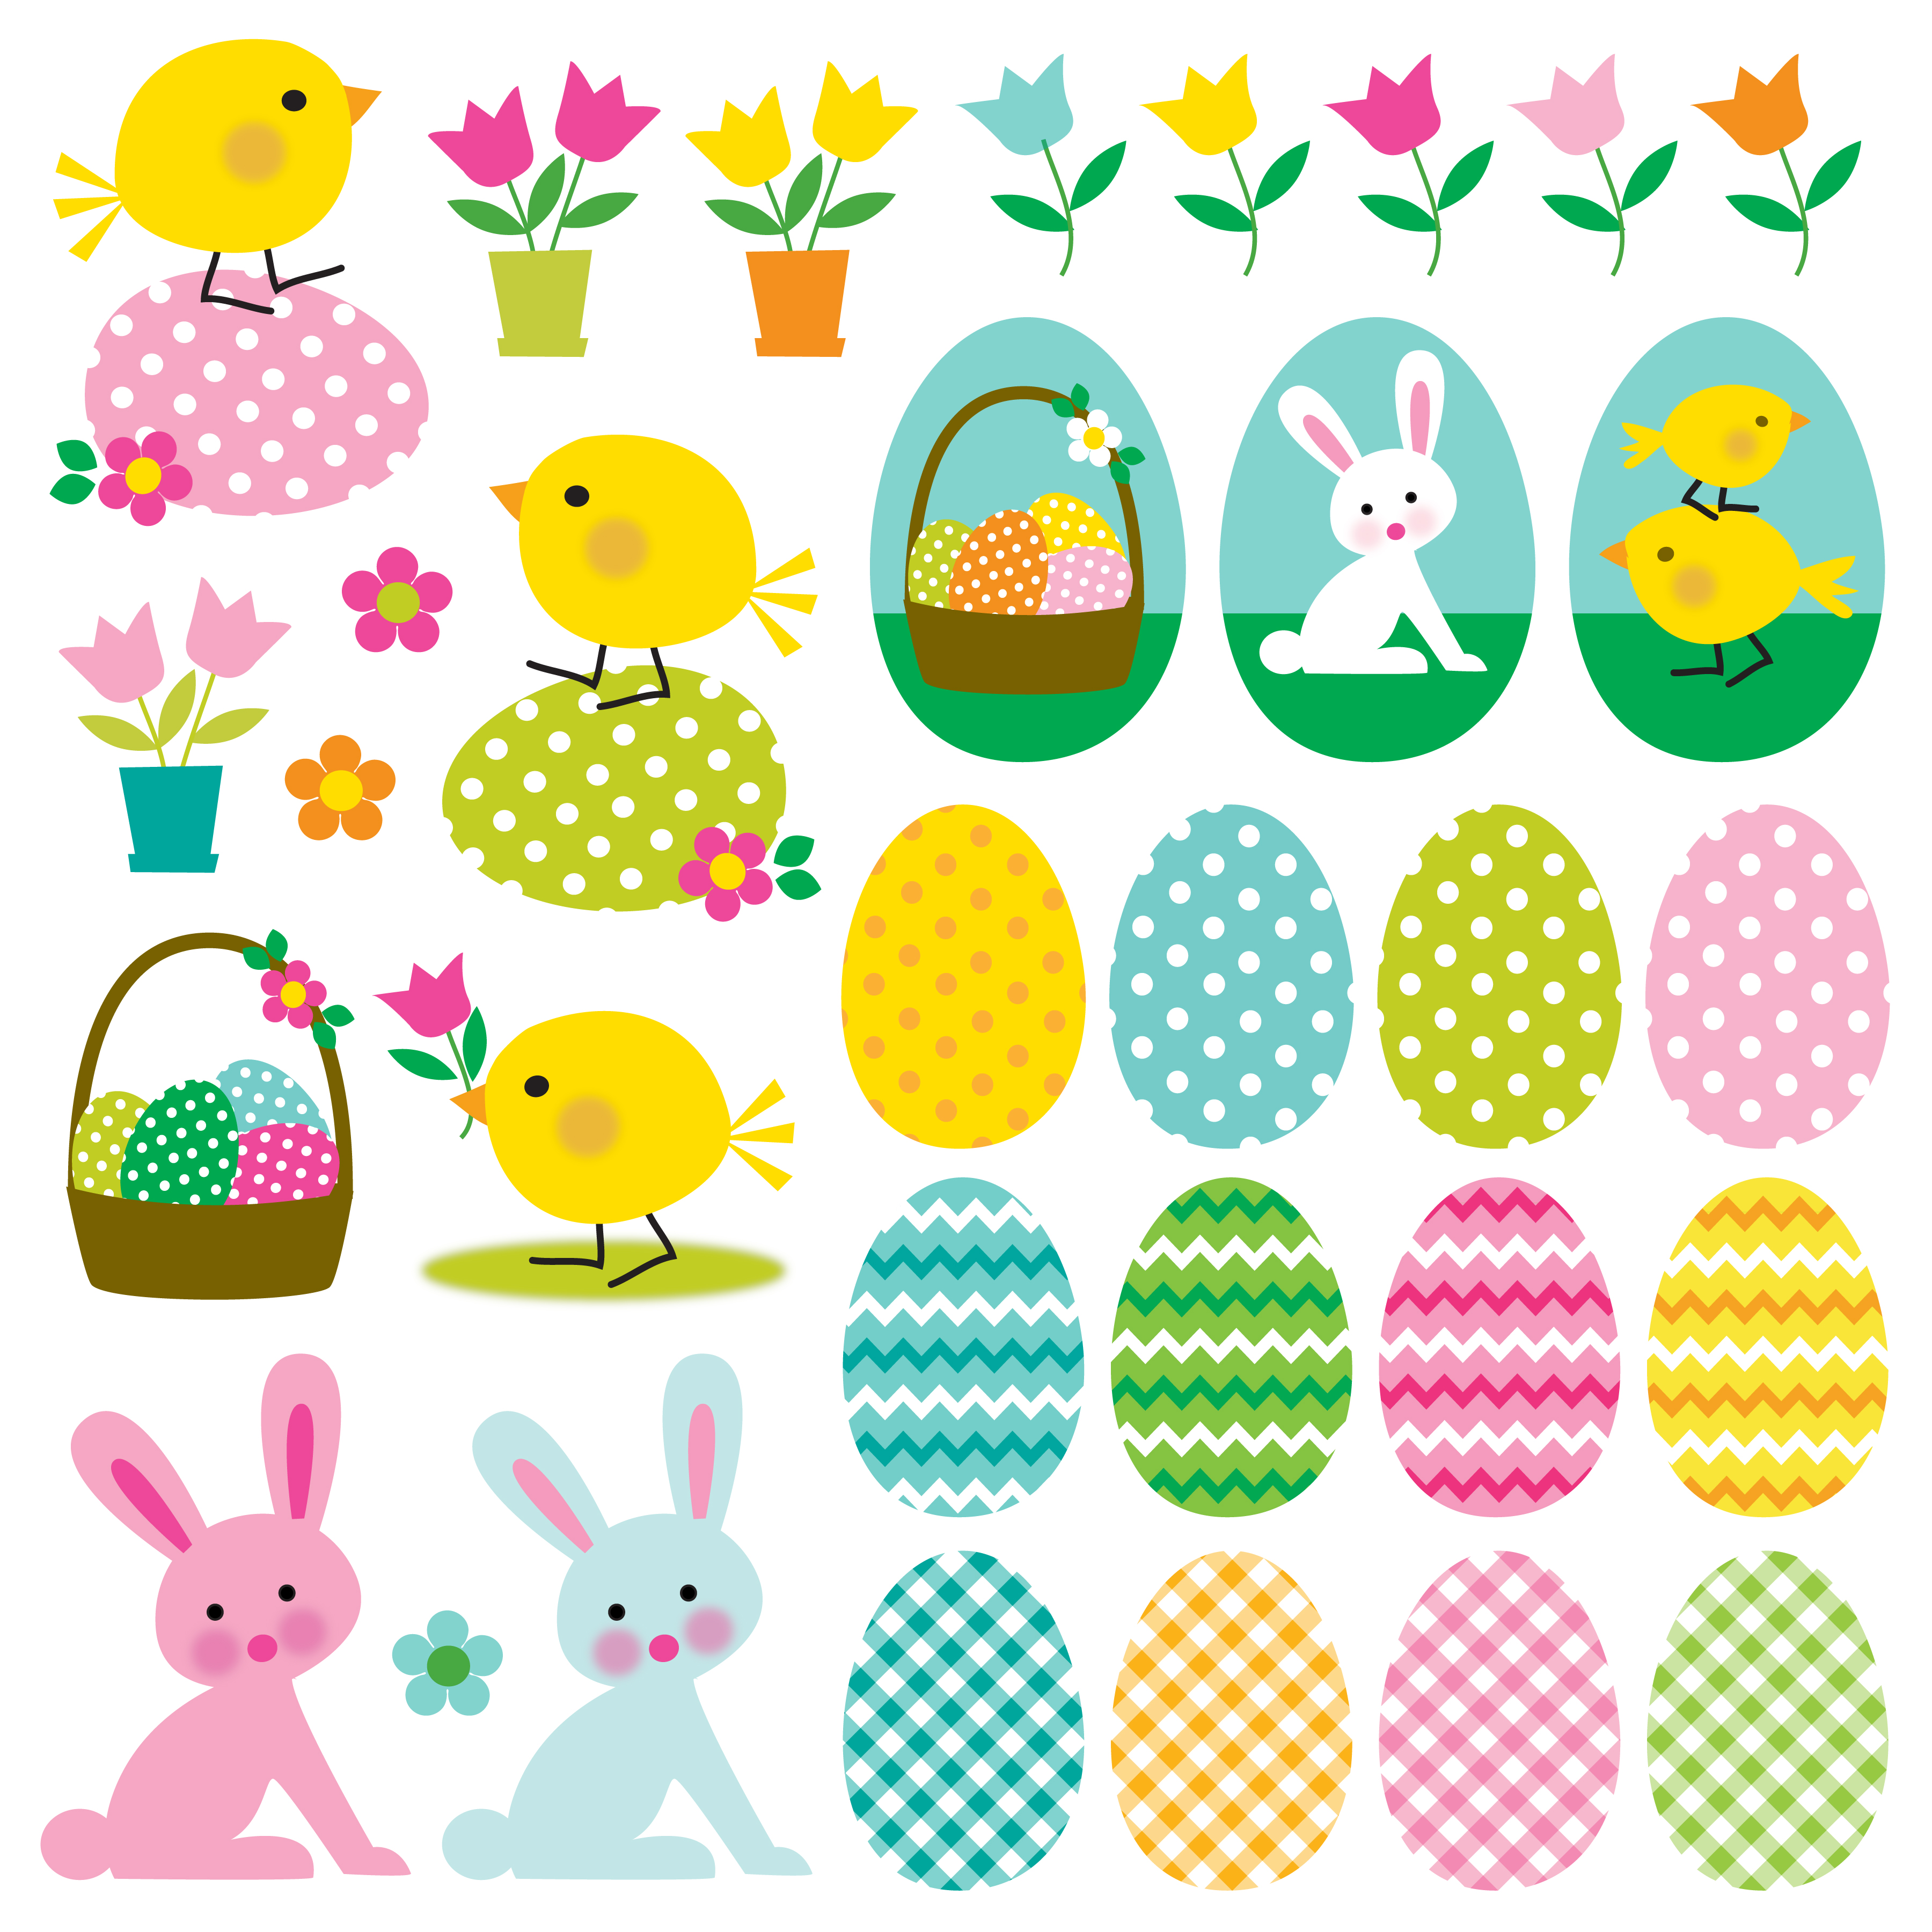 Easter clipart graphics - Download Free Vectors, Clipart ...